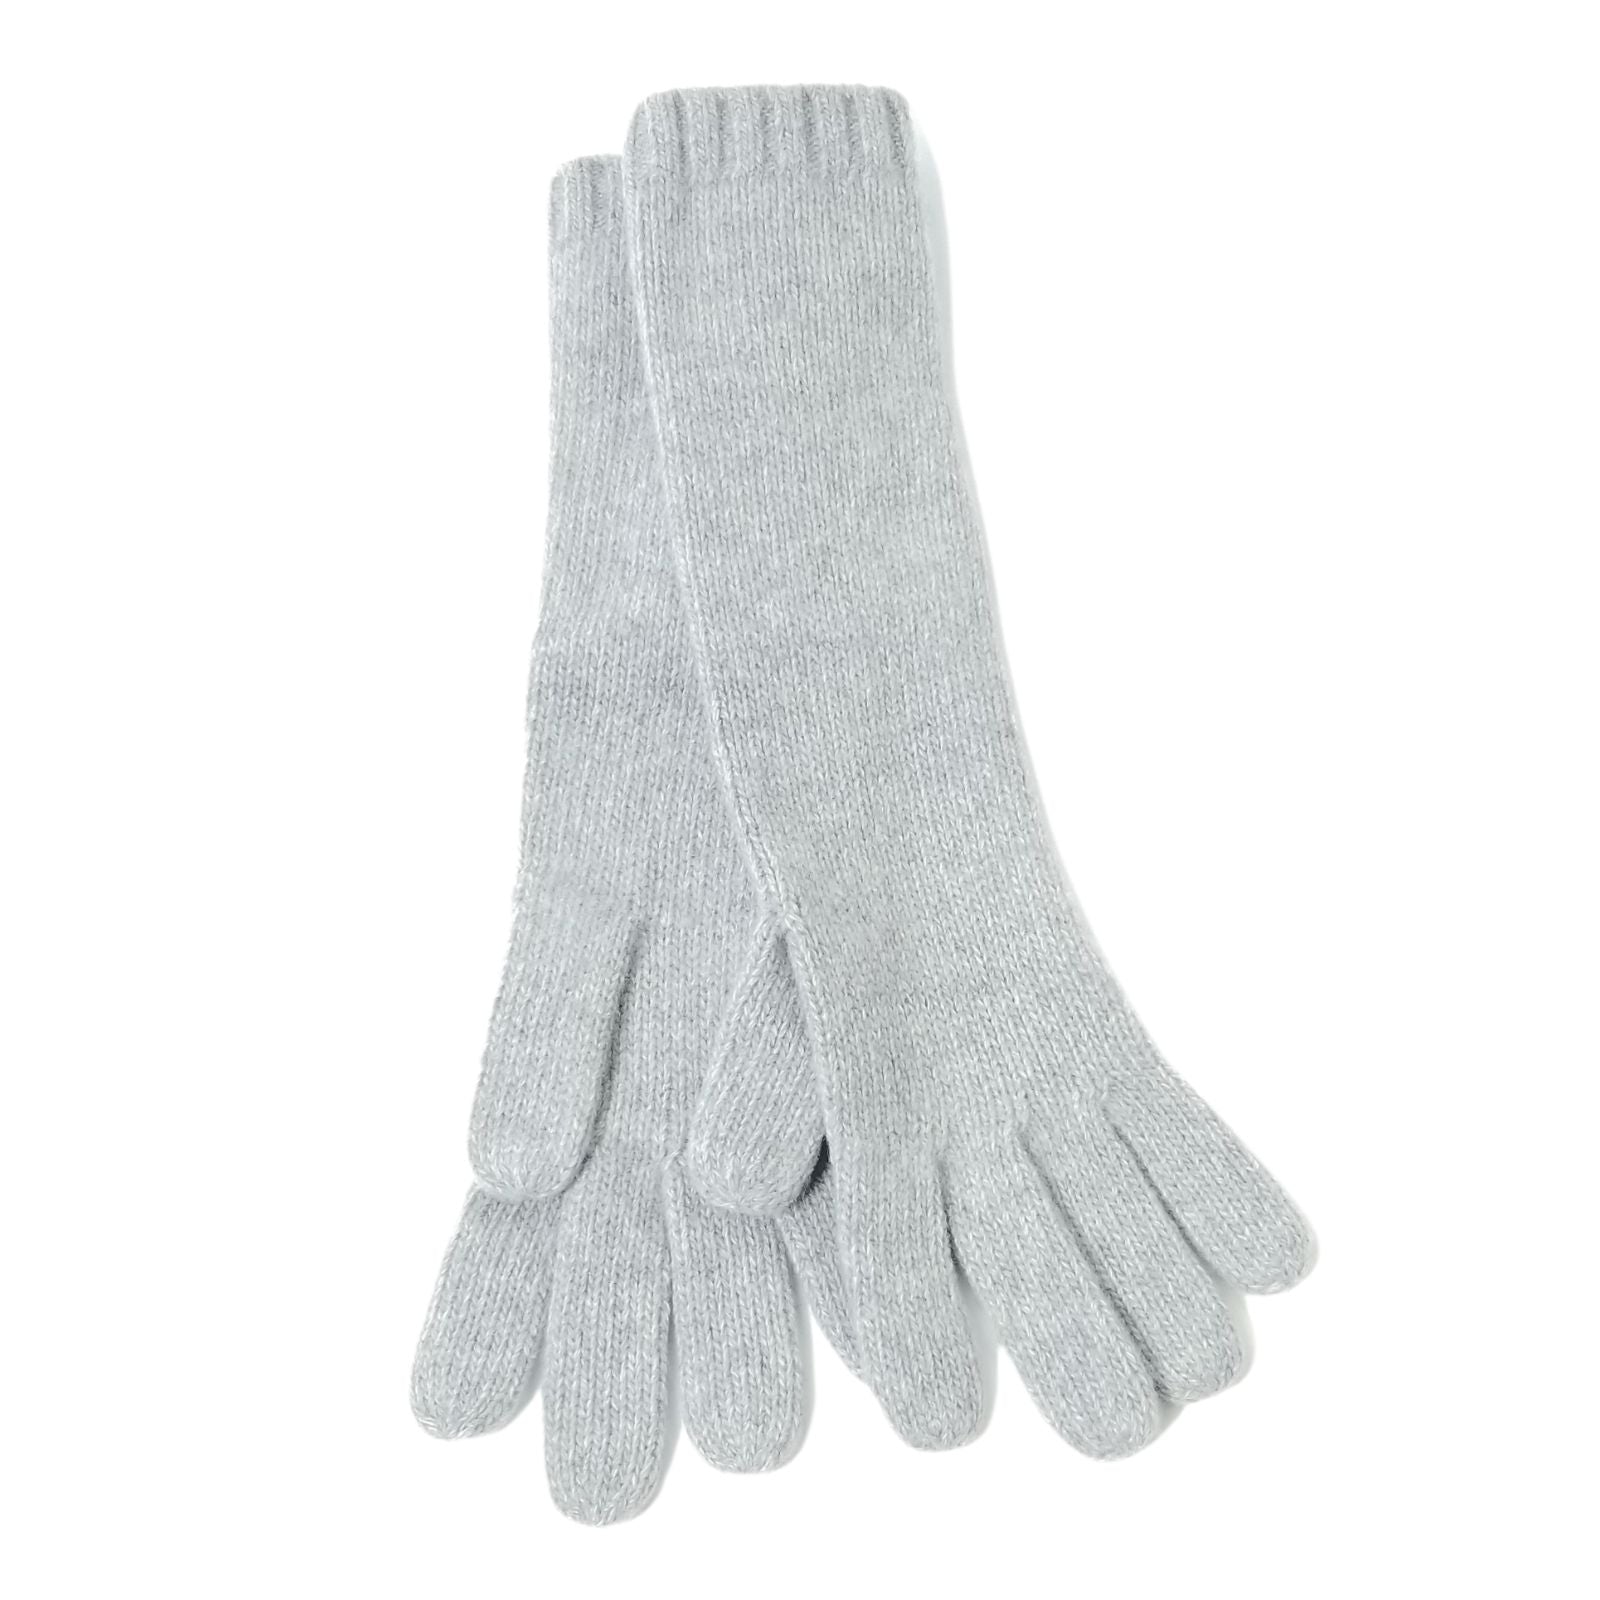 Cashmere glove 12"  Light Heather Grey